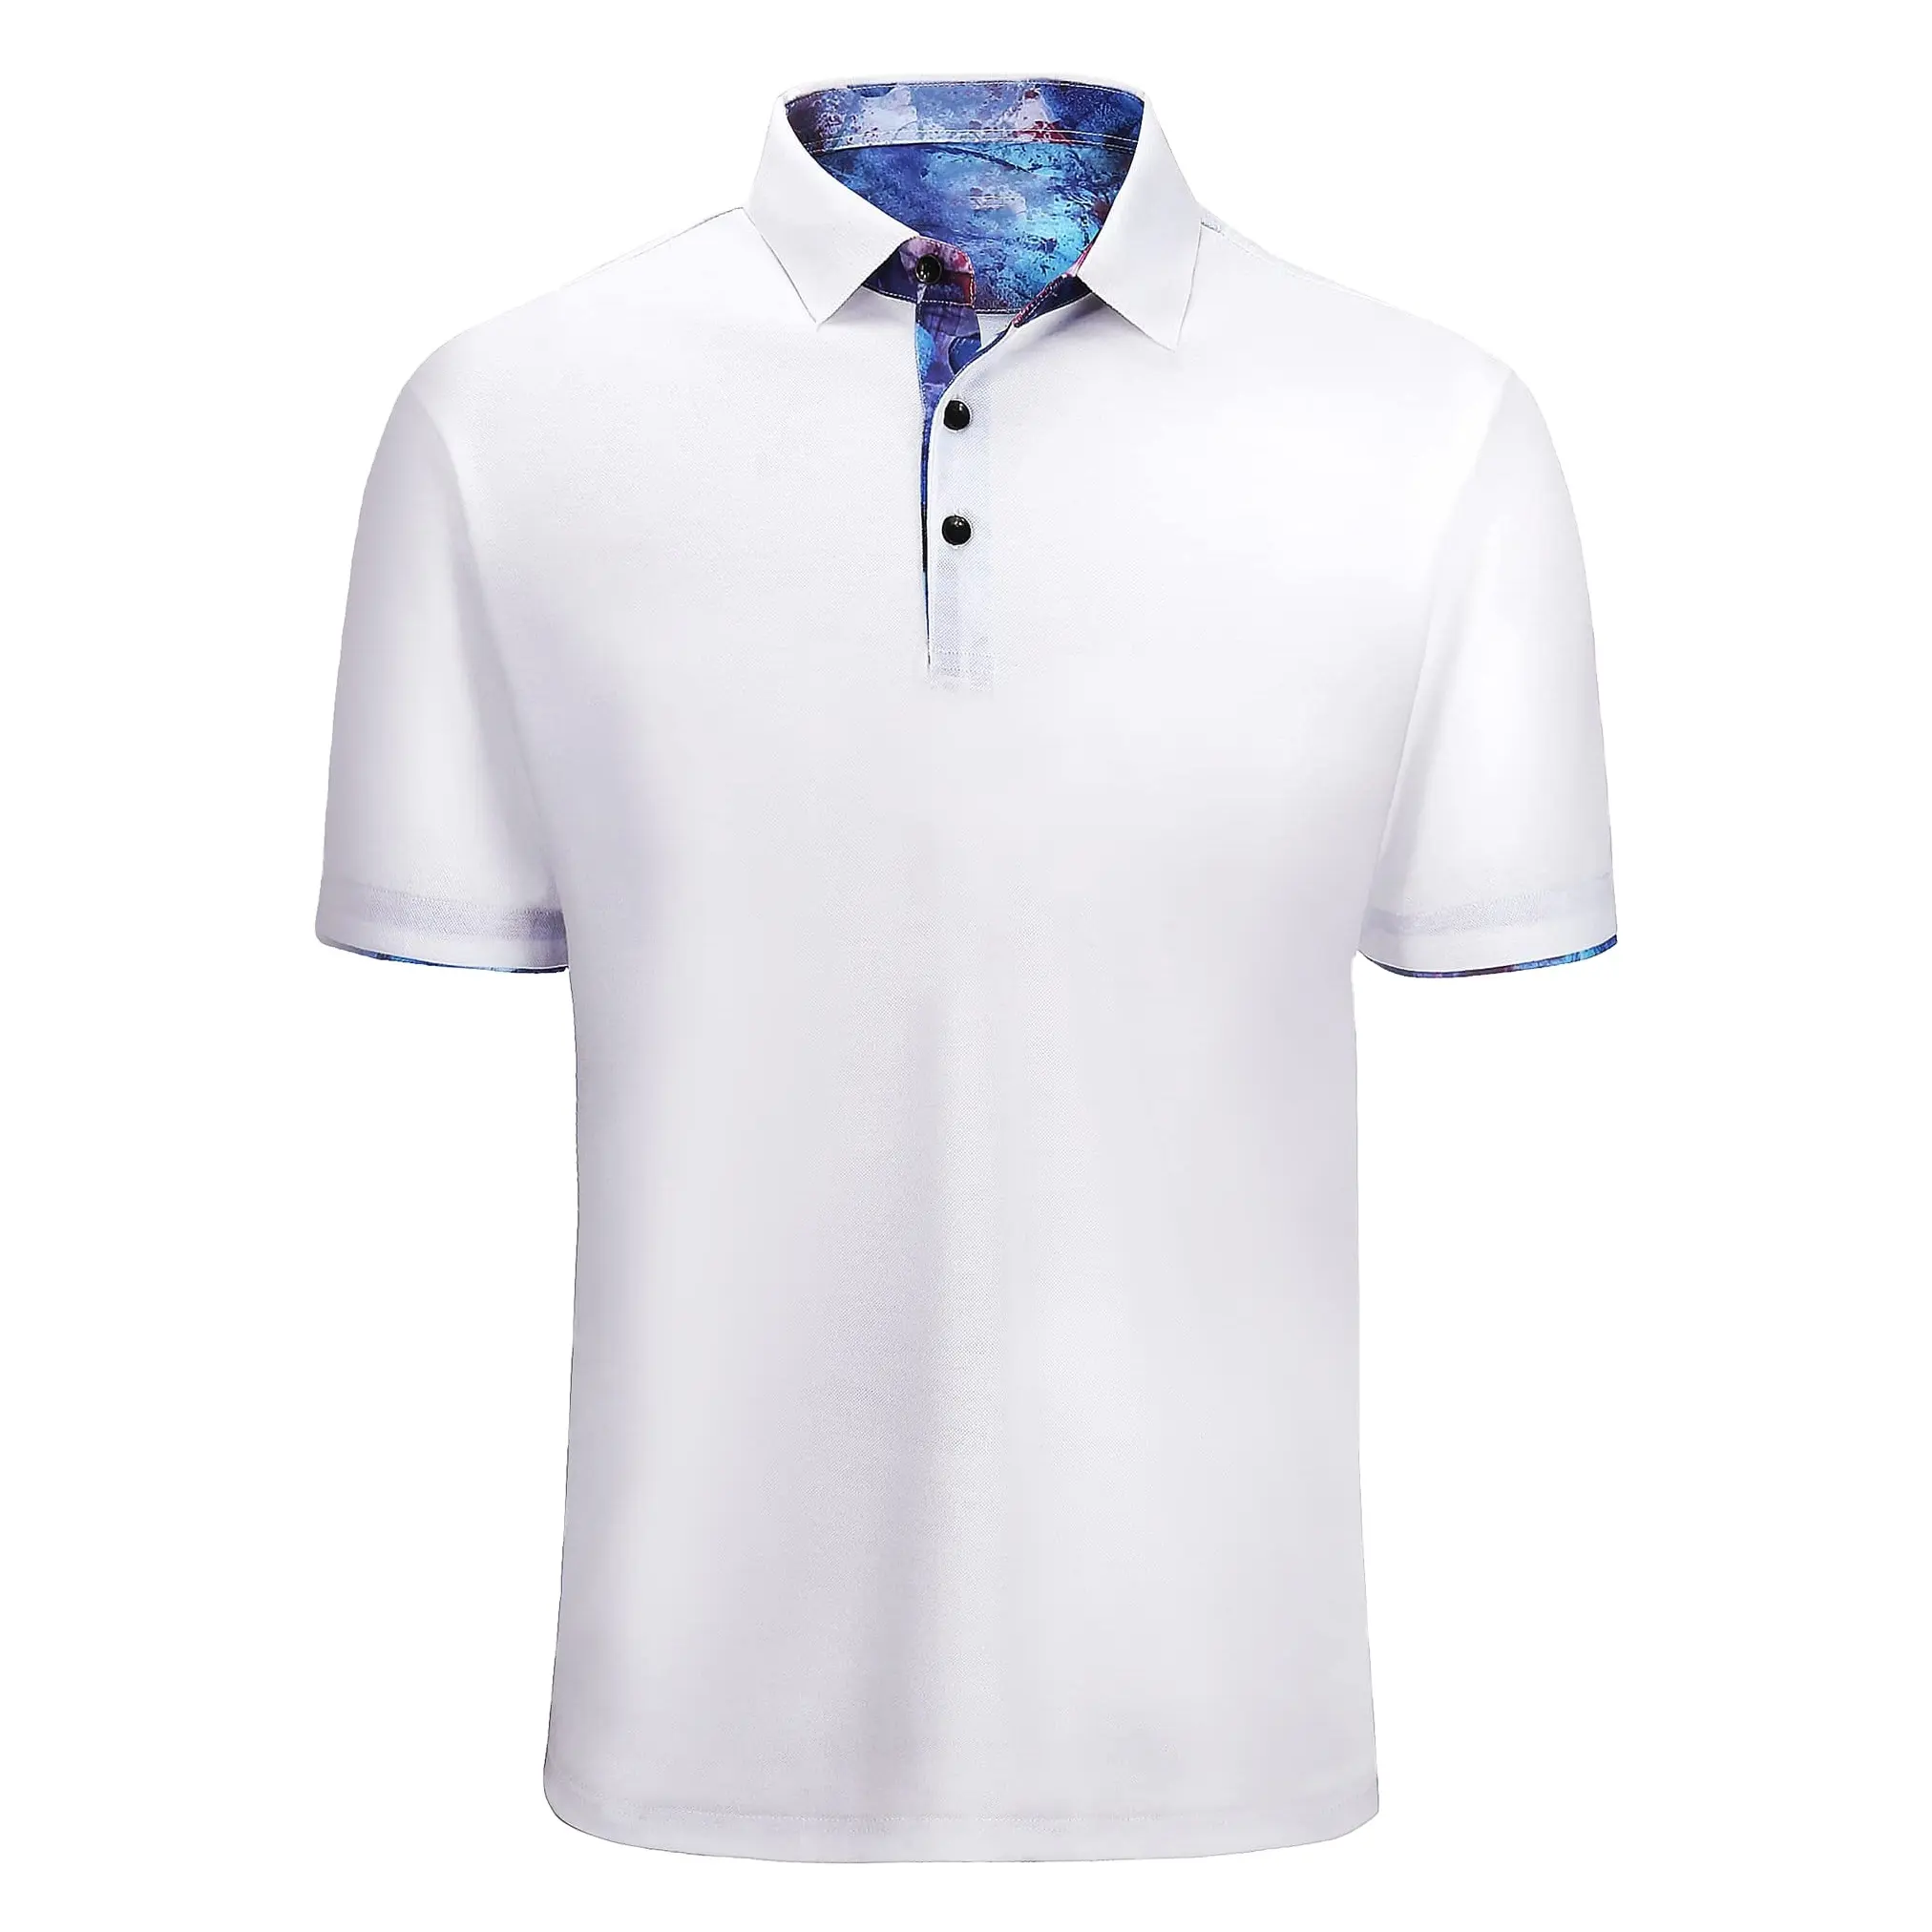 Men Polo Shirts Short Sleeve Summer cotton Classic Polo Casual Basic Design Fashionable 210gsm Cotton Plain Blank Customized Log